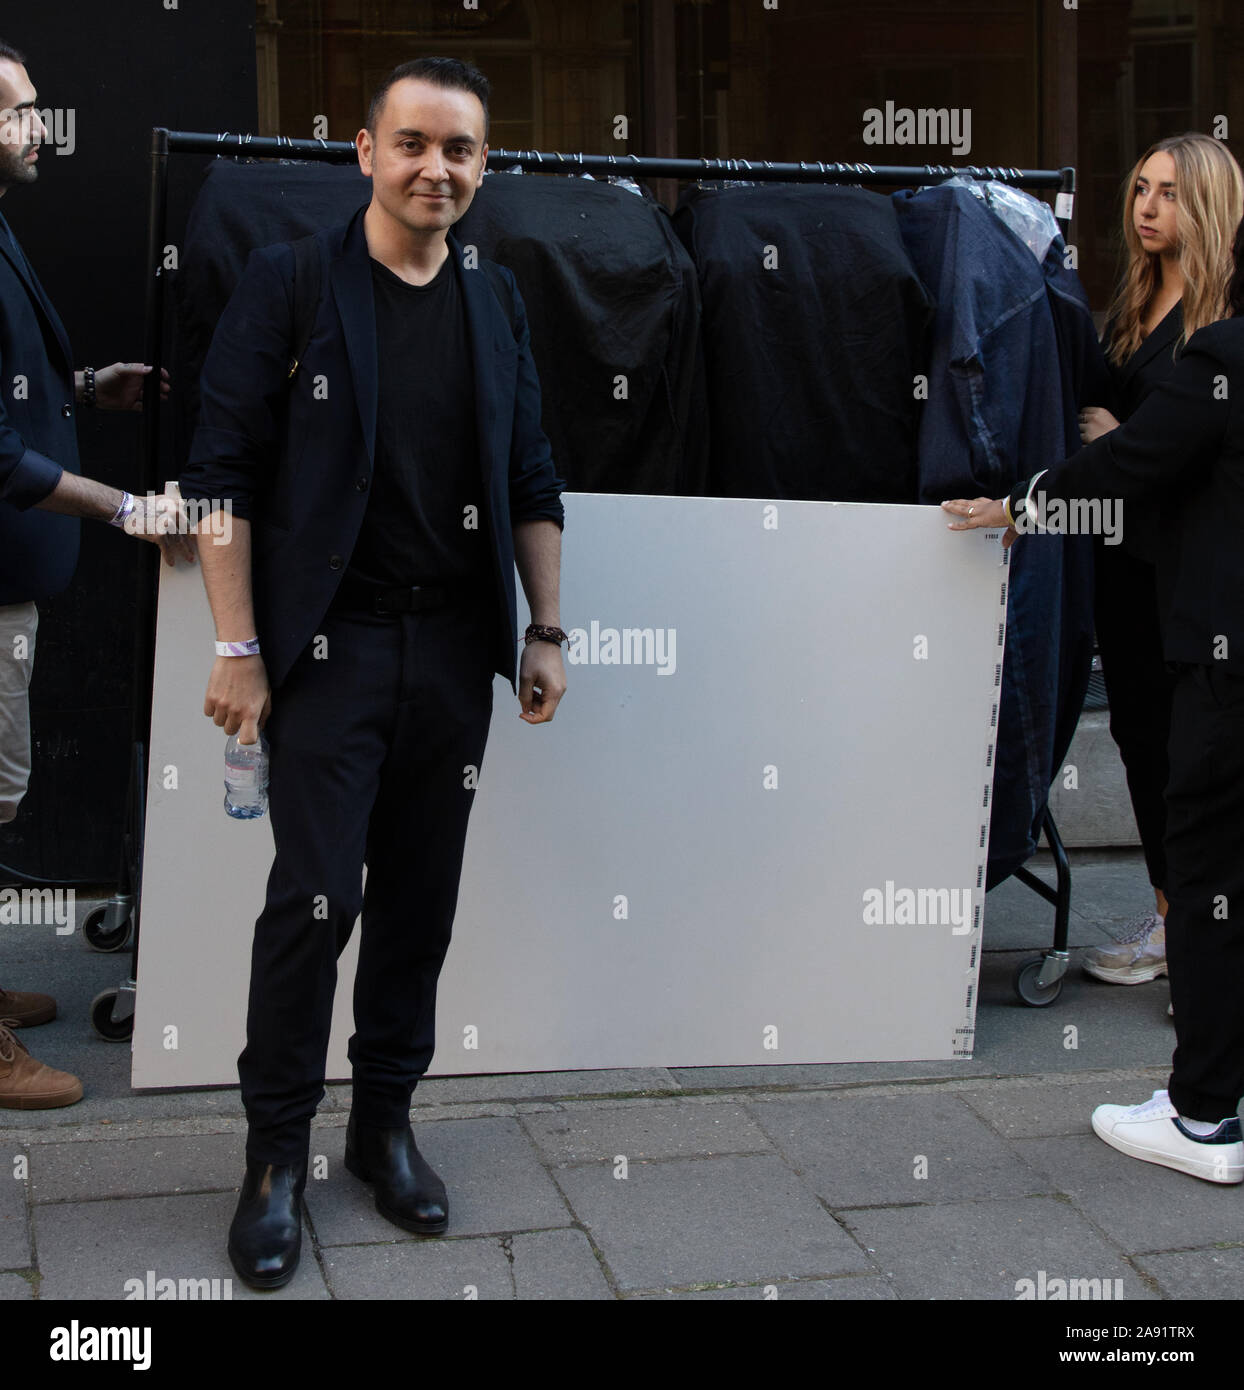 London, UK. 13th September, 2019. Fashion designer Turkish born Bora Aksu seen outside at The Store X on 180 Strand, before showing his designs at the London Fashion Week September 2019. Credit: Joe Kuis / Alamy News Stock Photo